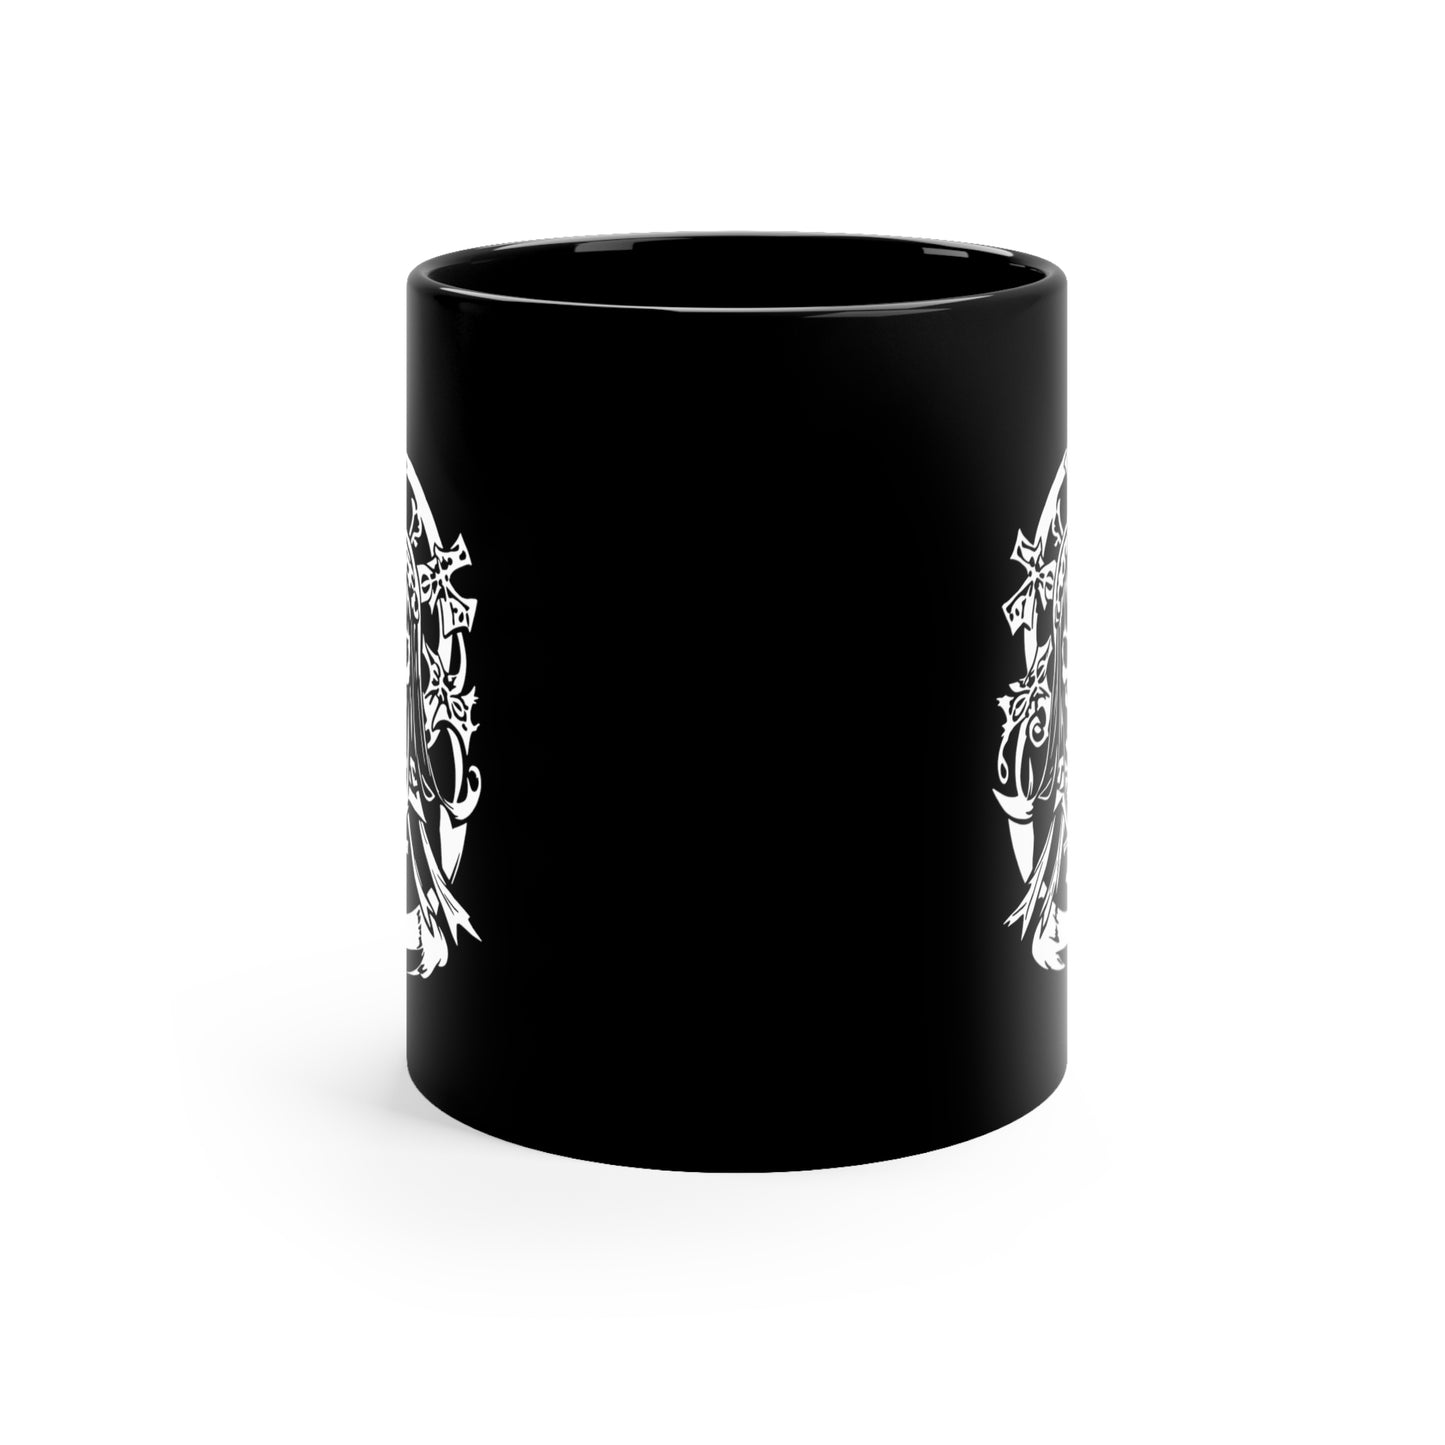 Gothic Skeleton Girl - 11oz Black Mug